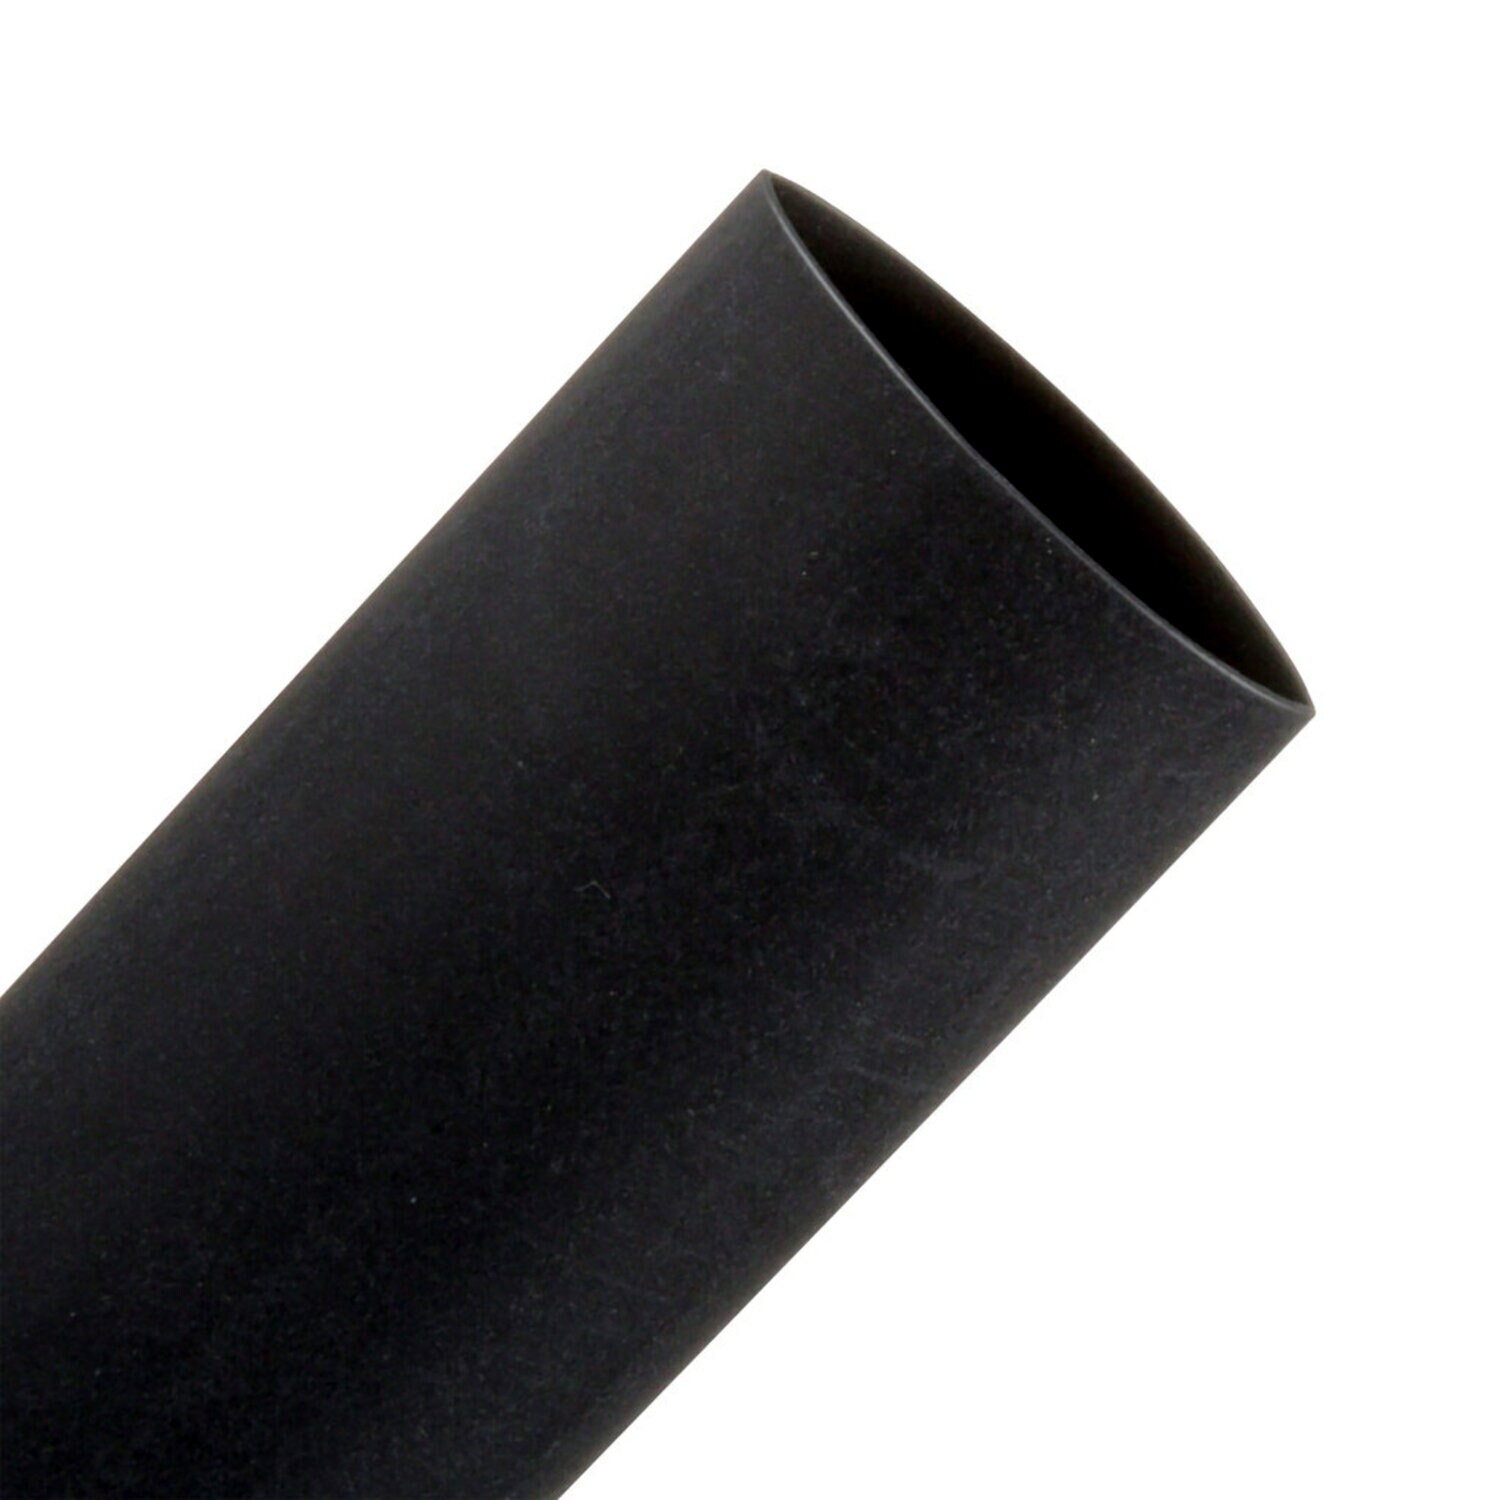 7100027324 - 3M Heat Shrink Thin-Wall Tubing FP-301-3/4-Black-200`: 200 ft spool
length, 600 ft/case